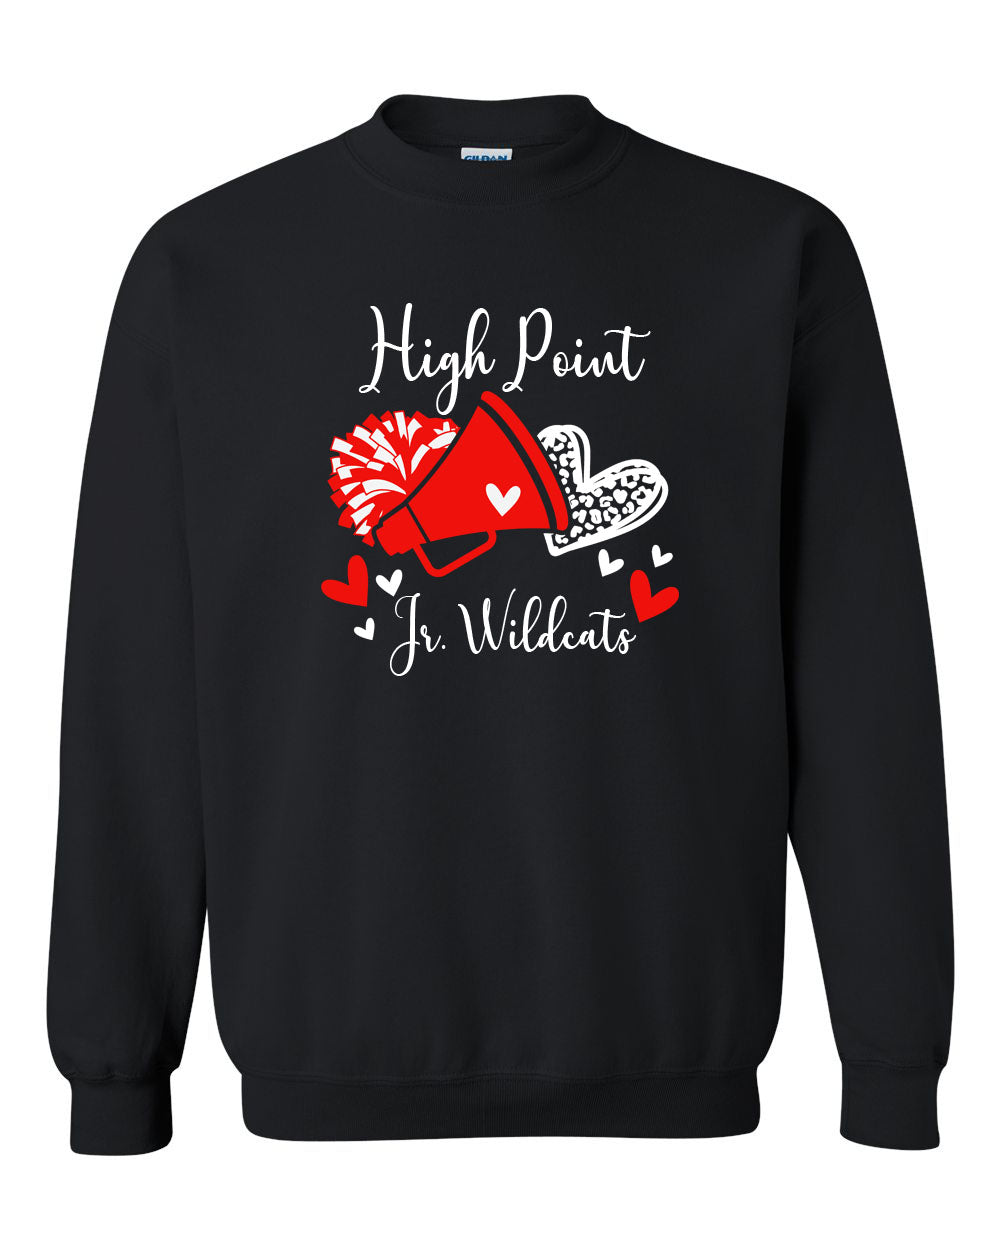 High Point Cheer Design 6 non hooded sweatshirt